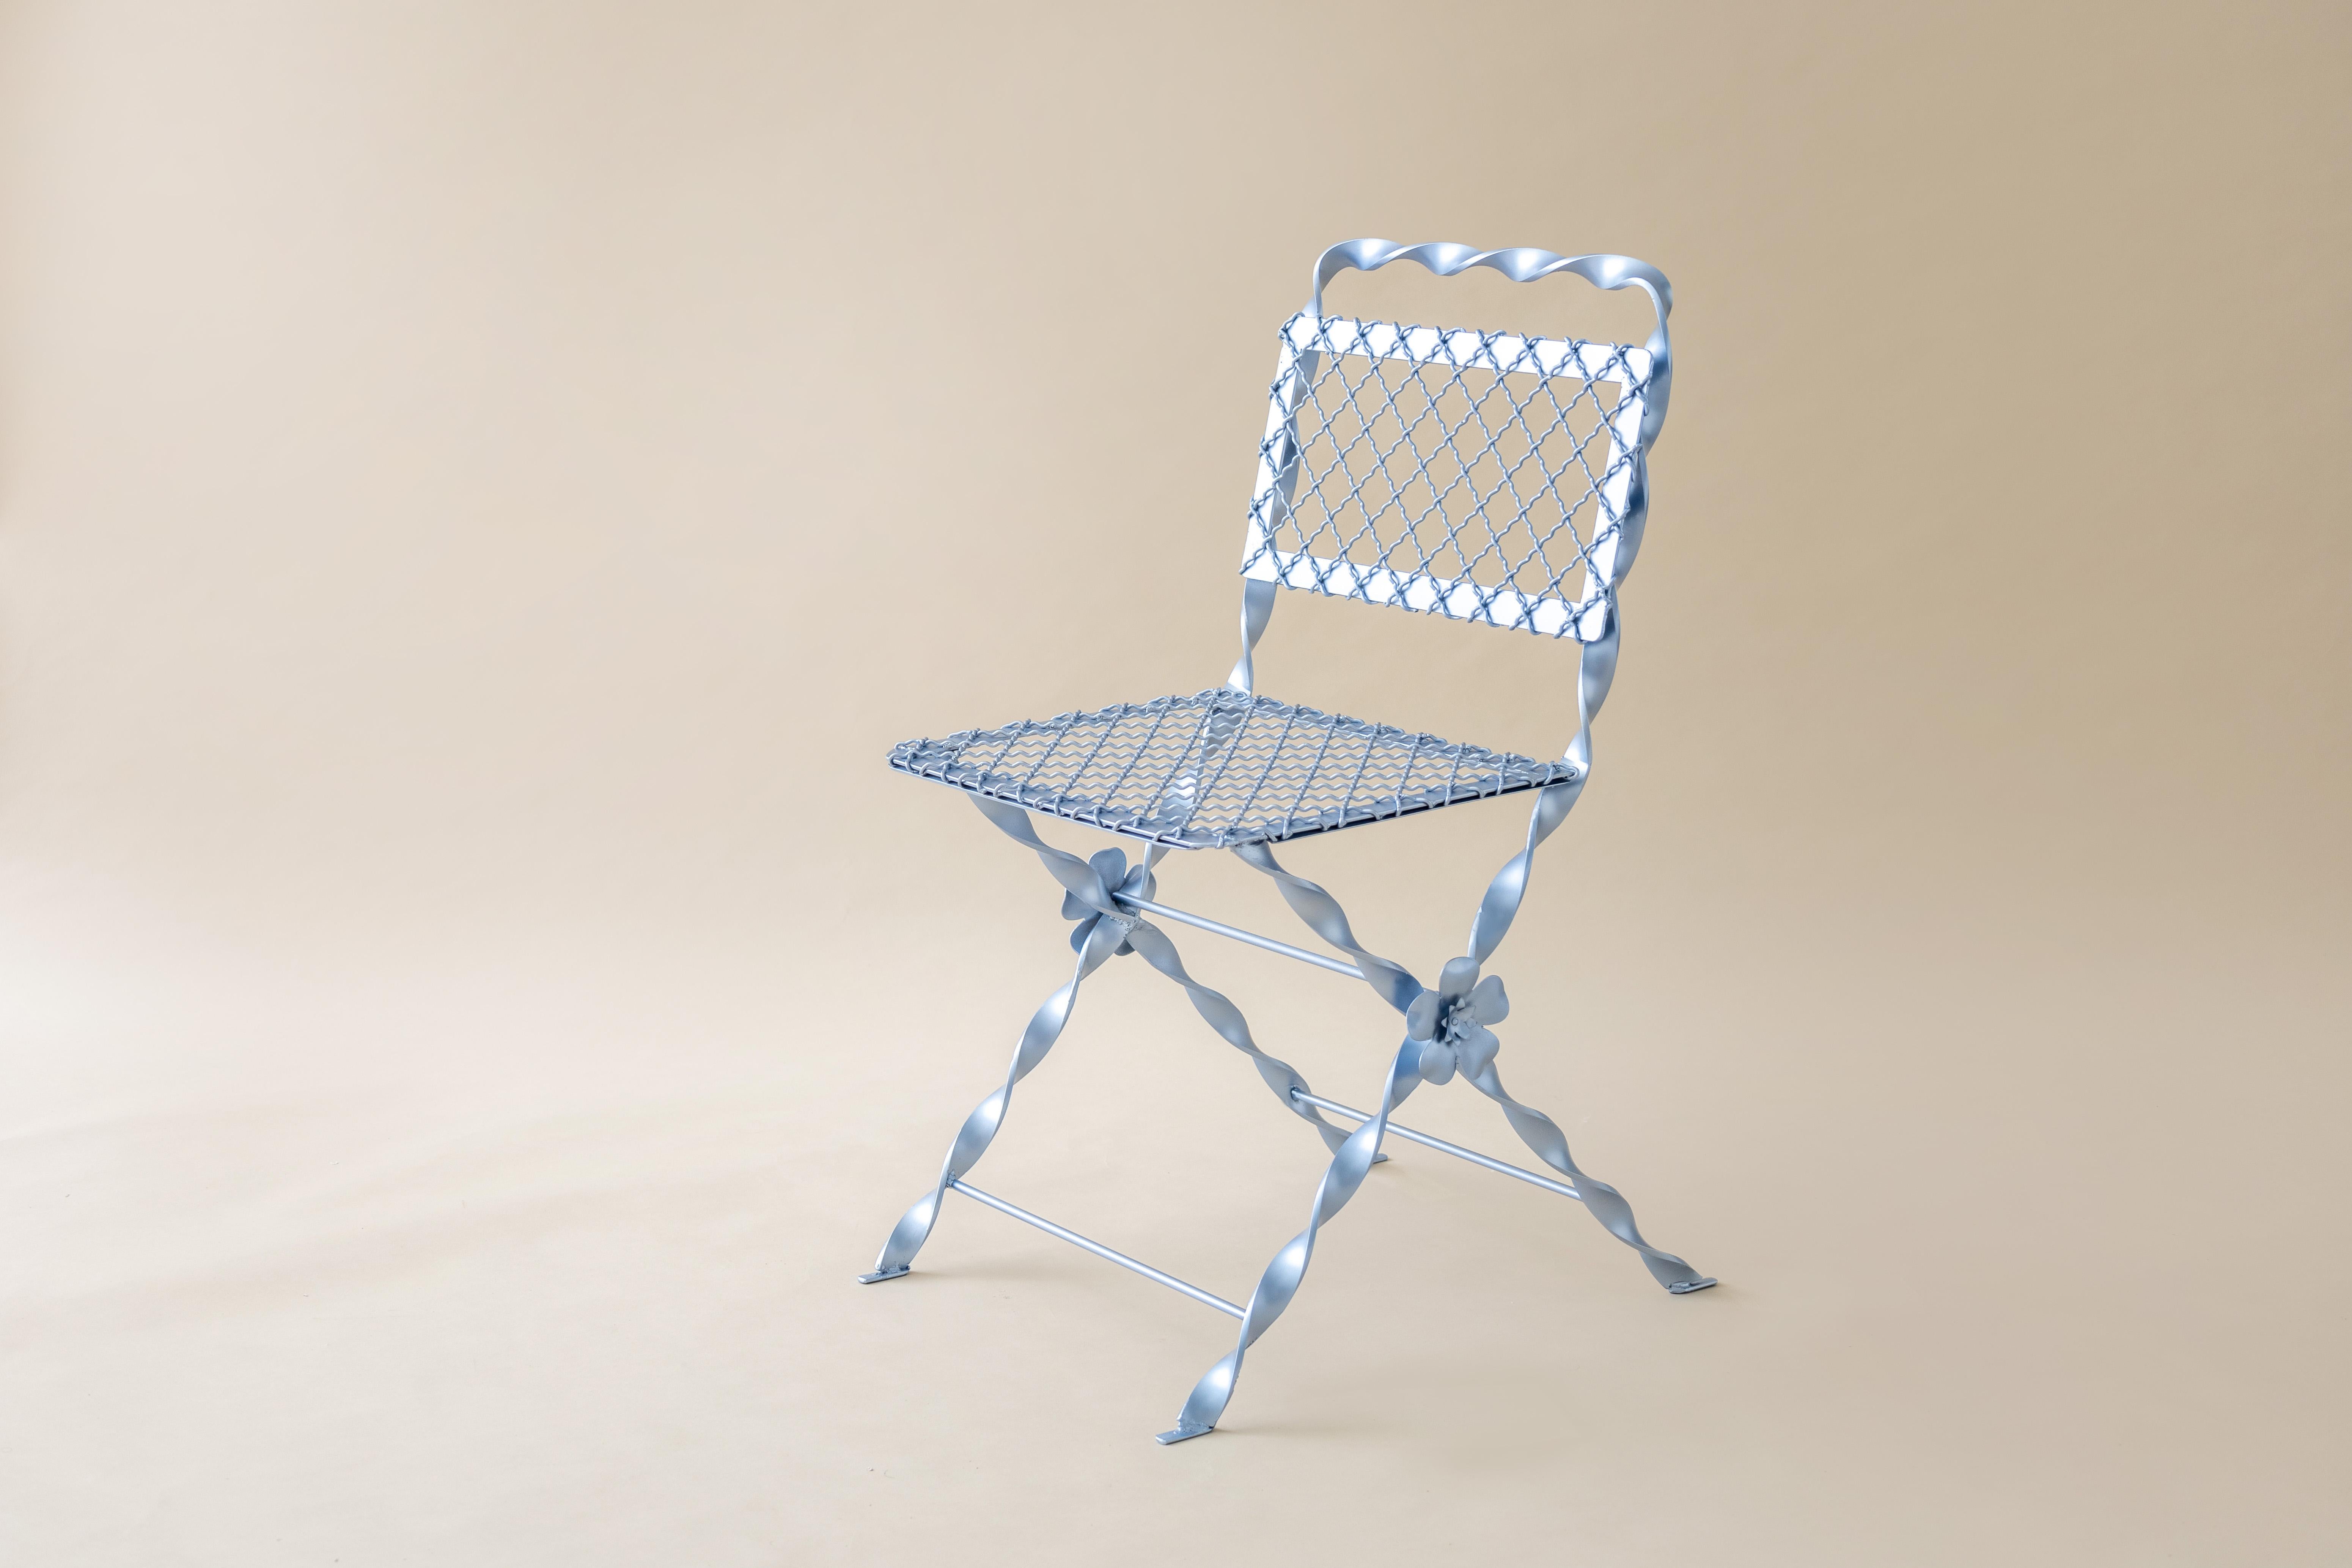 Wrought Iron Garden Chair Metallic Sky Blue finish Contemporary Design For Sale 1